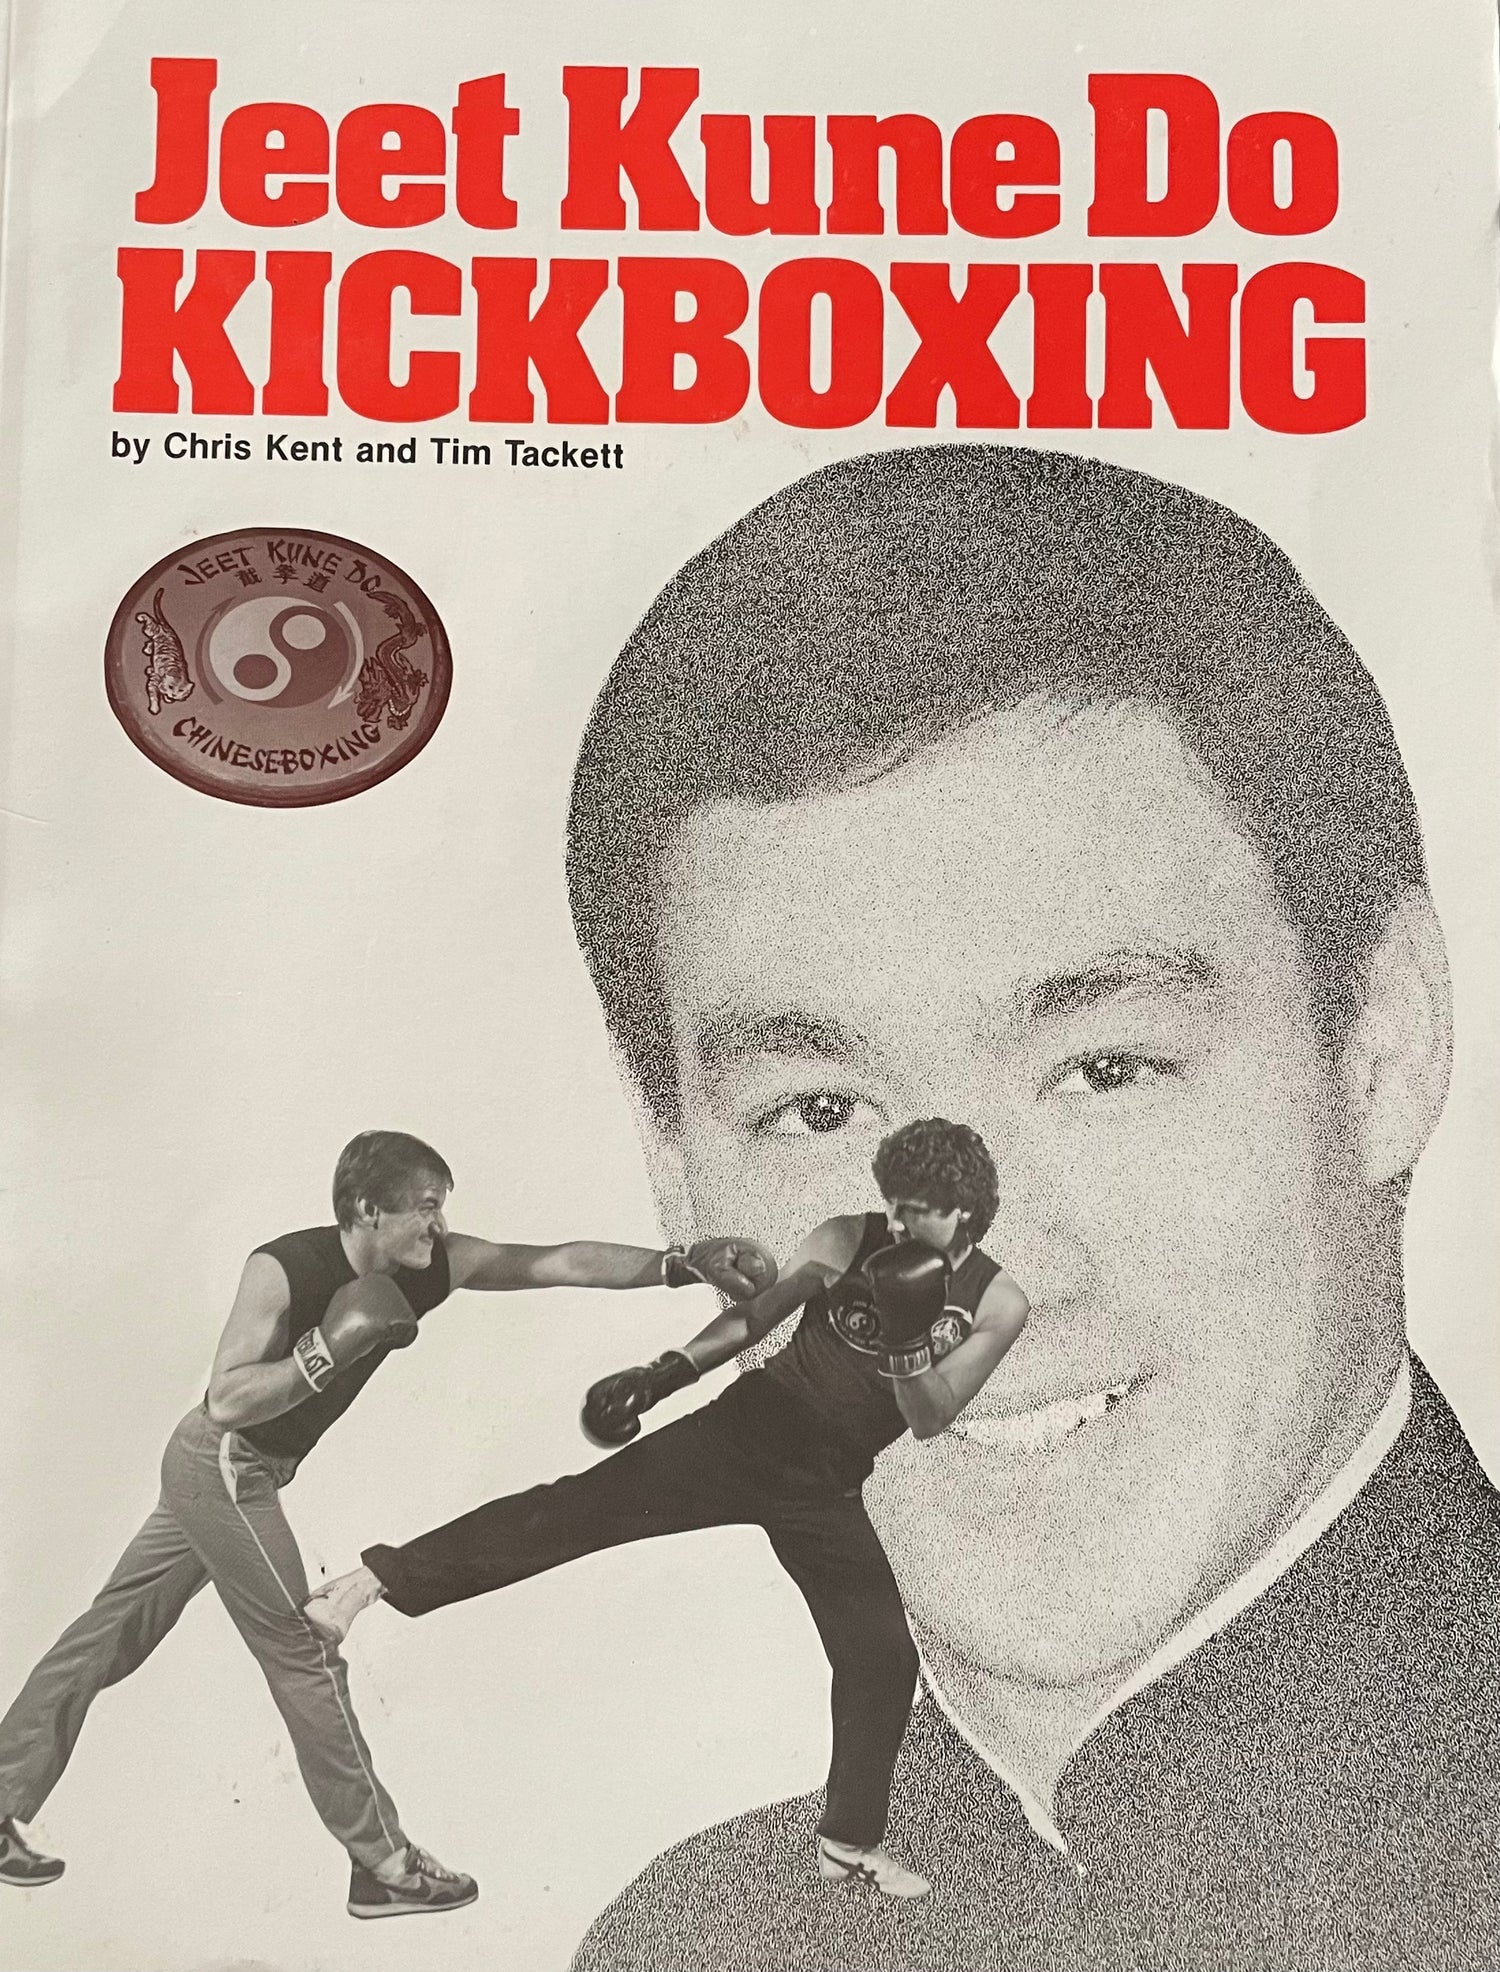 Libro Jeet Kune Do Kickboxing de Chris Kent y Tim Tackett (usado)